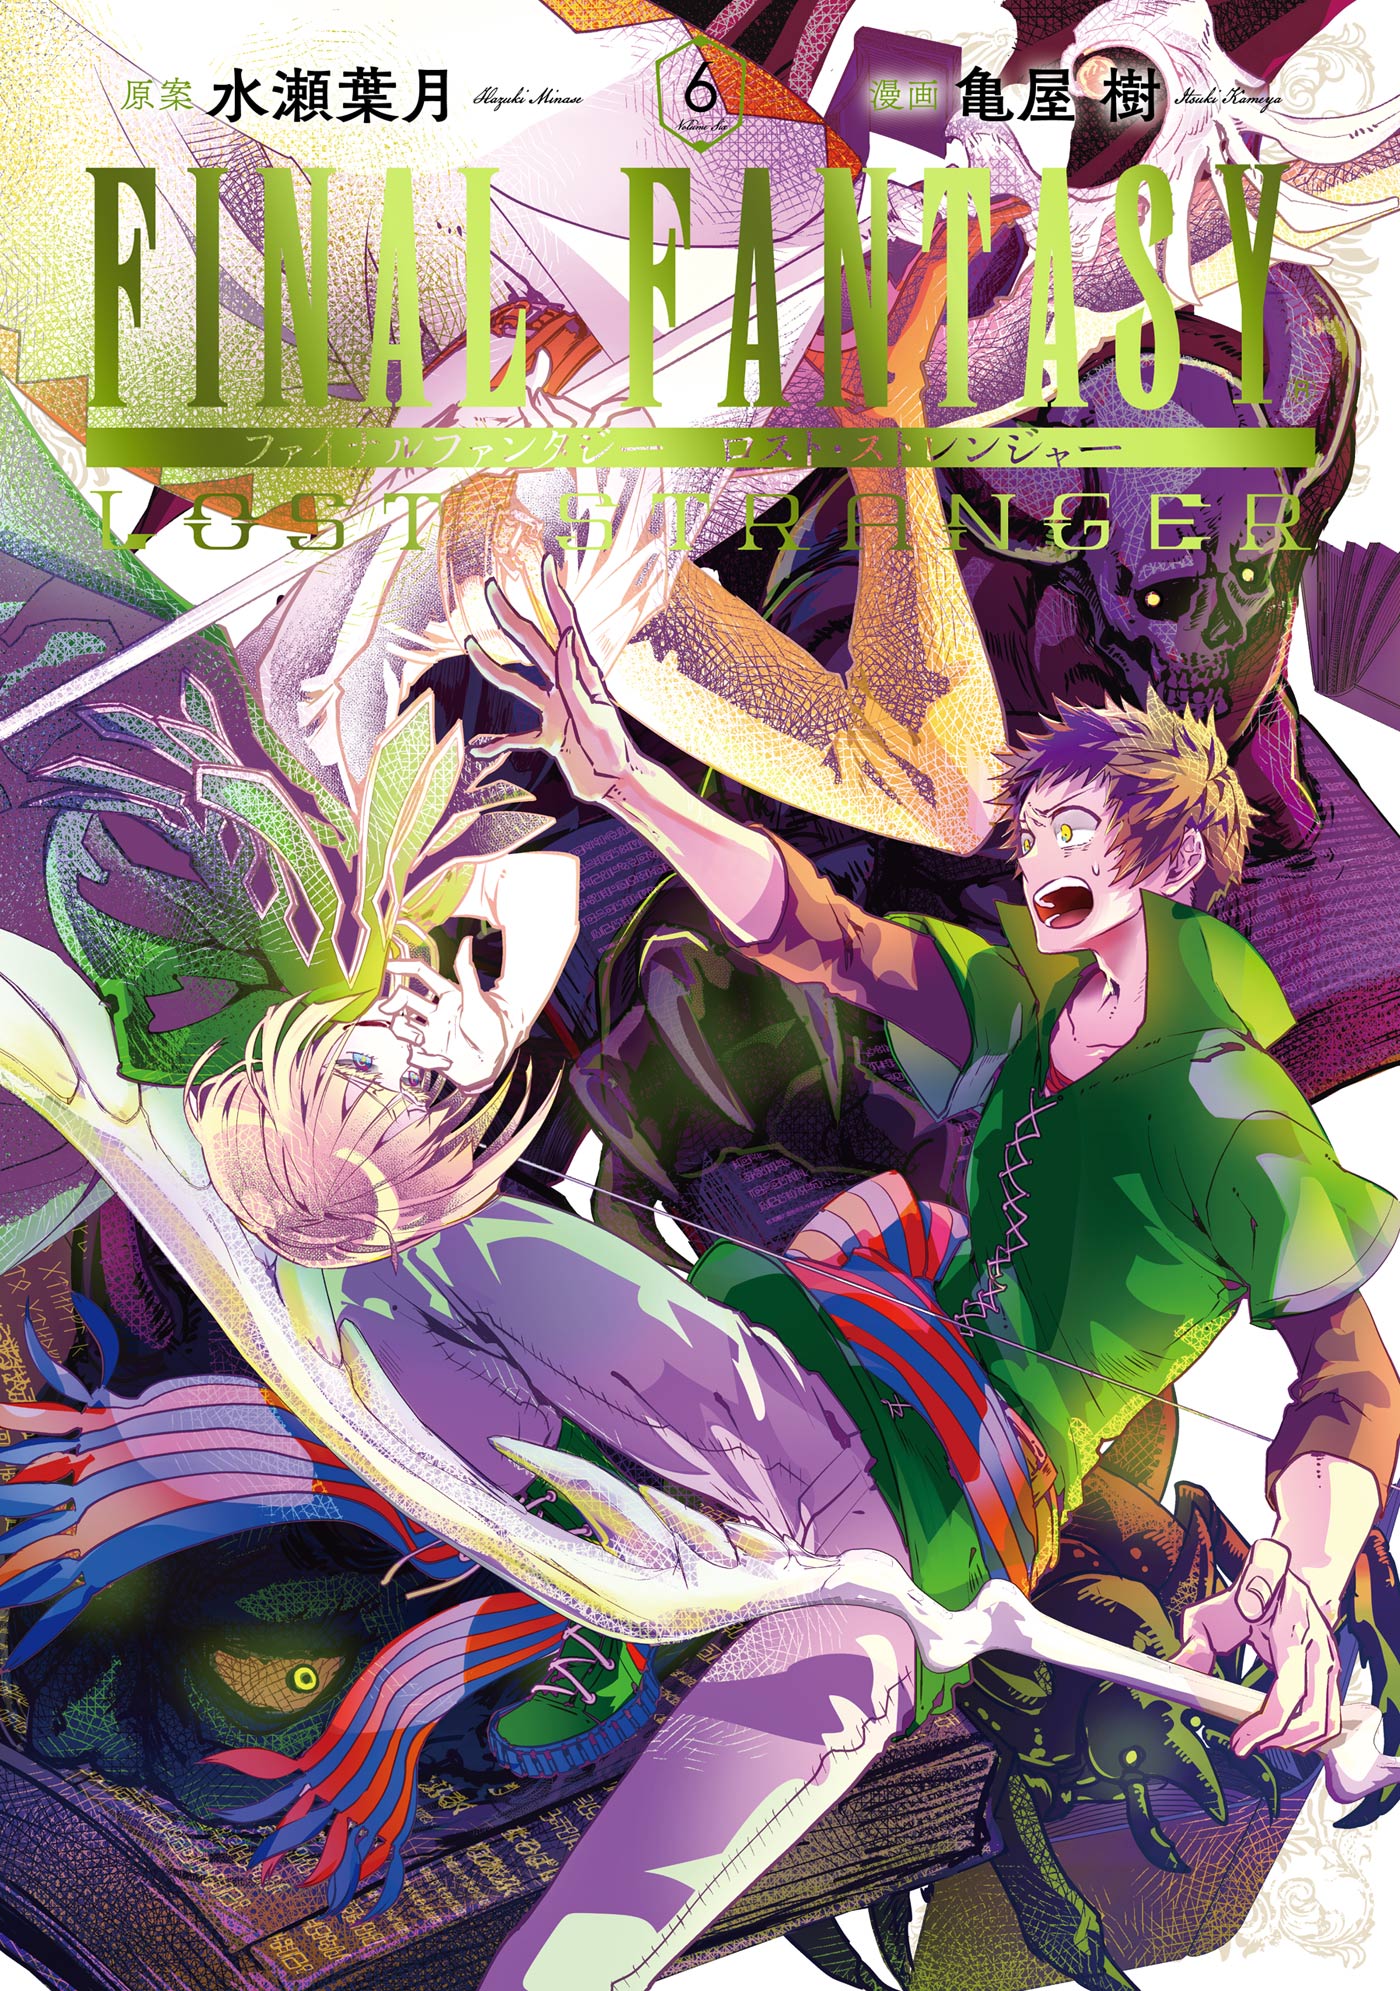 Final Fantasy Lost Stranger 6巻 漫画 無料試し読みなら 電子書籍ストア ブックライブ